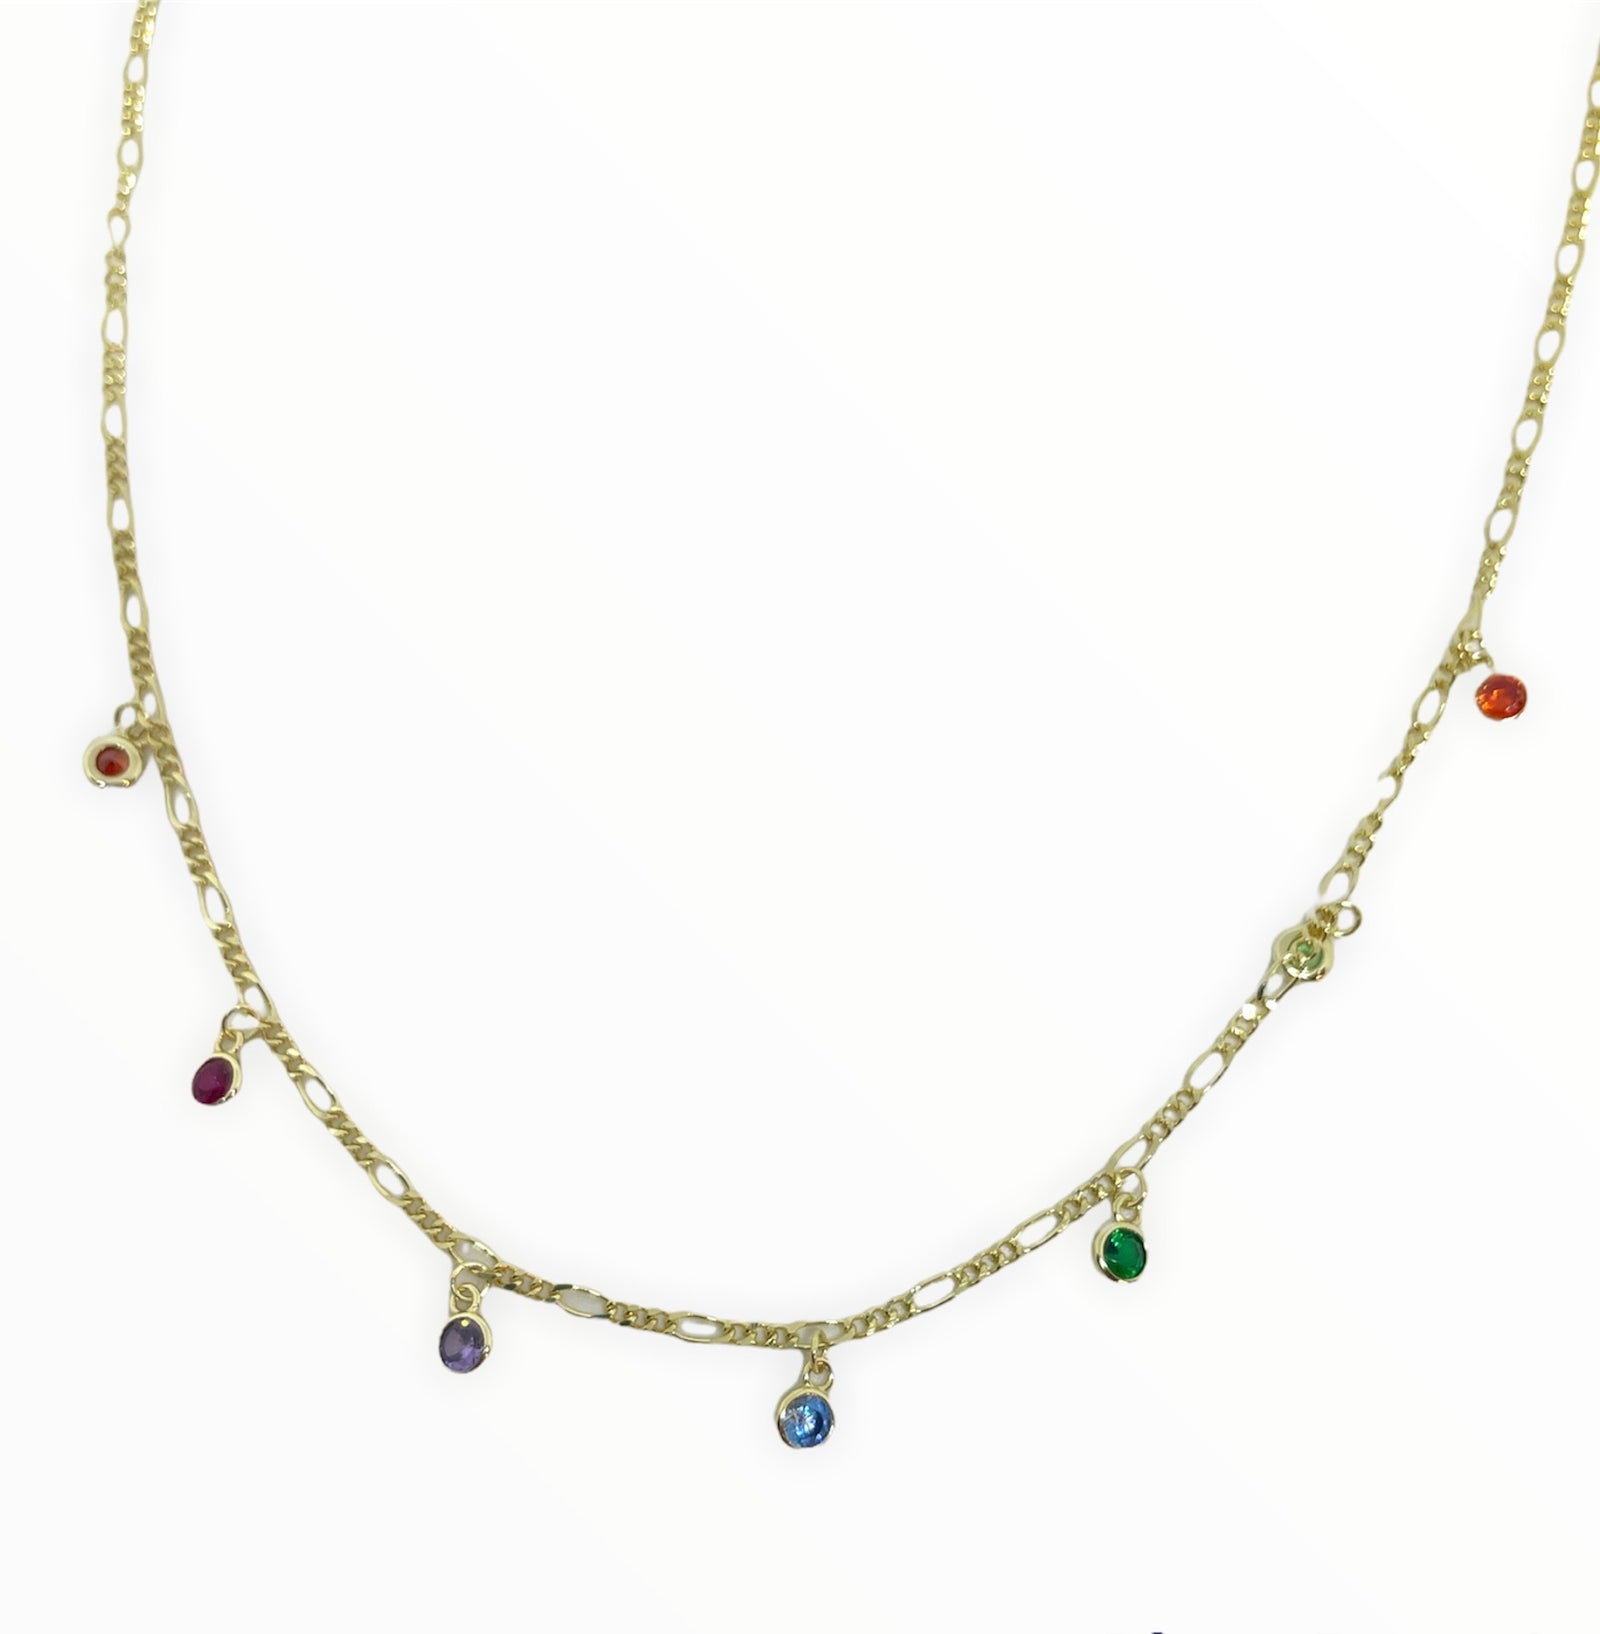 Cz rainbow charms necklace